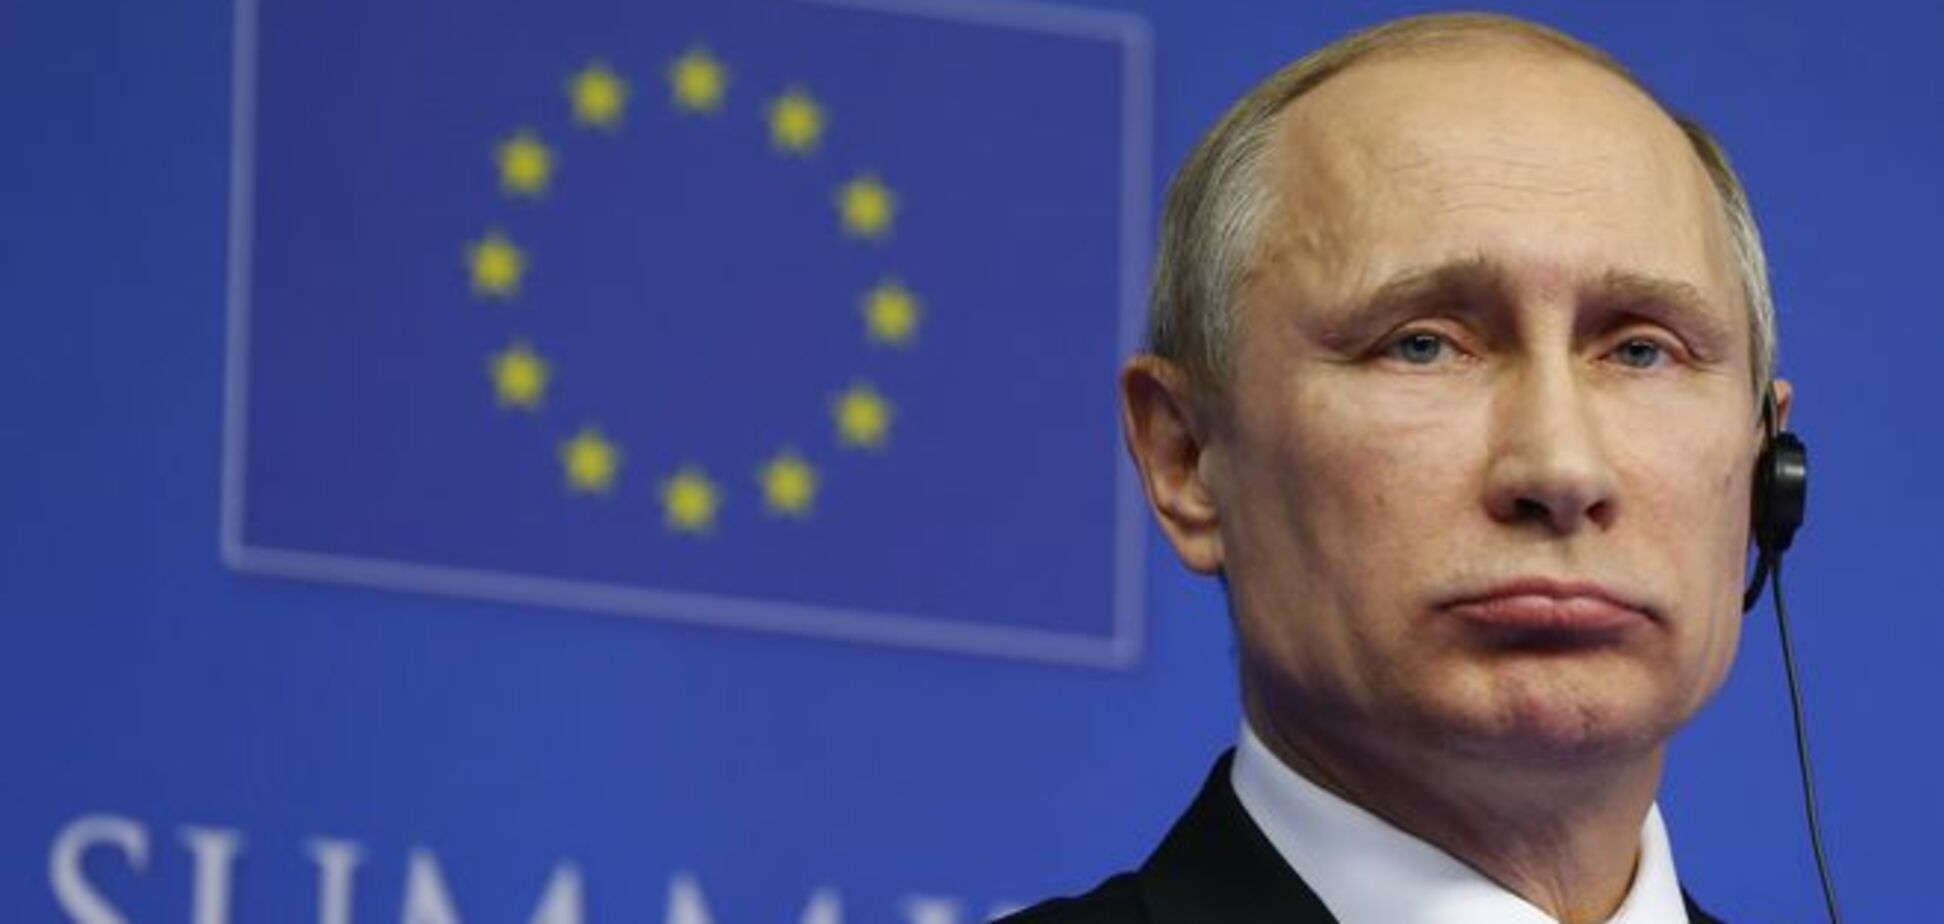 Украина требует от ЕС наказать Путина за признание аннексии Крыма - СМИ